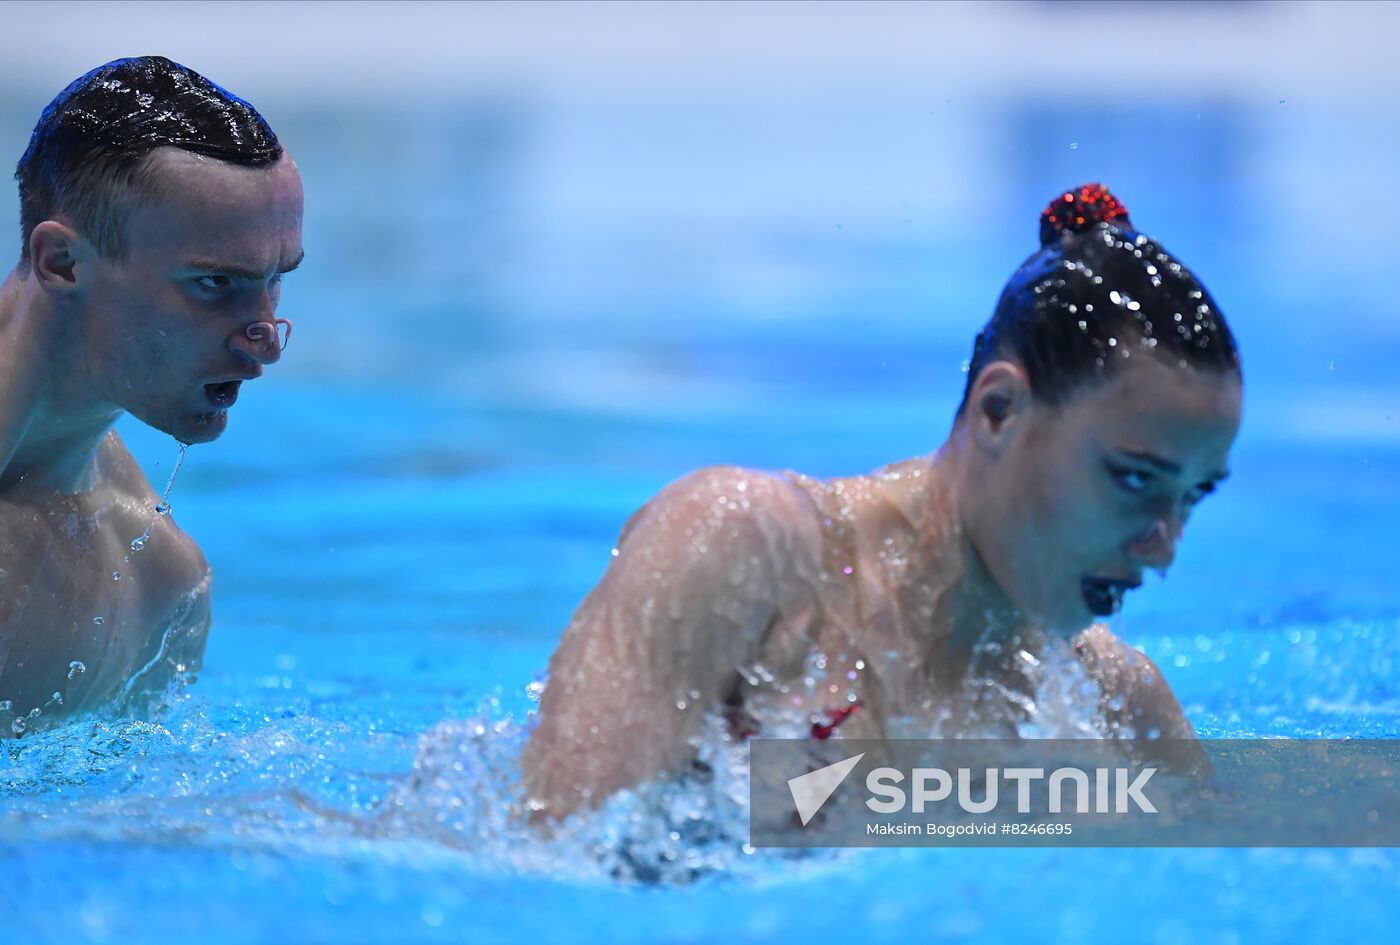 Russia Solidarity Games Artistic Swimming Mixed Duet Sputnik Mediabank